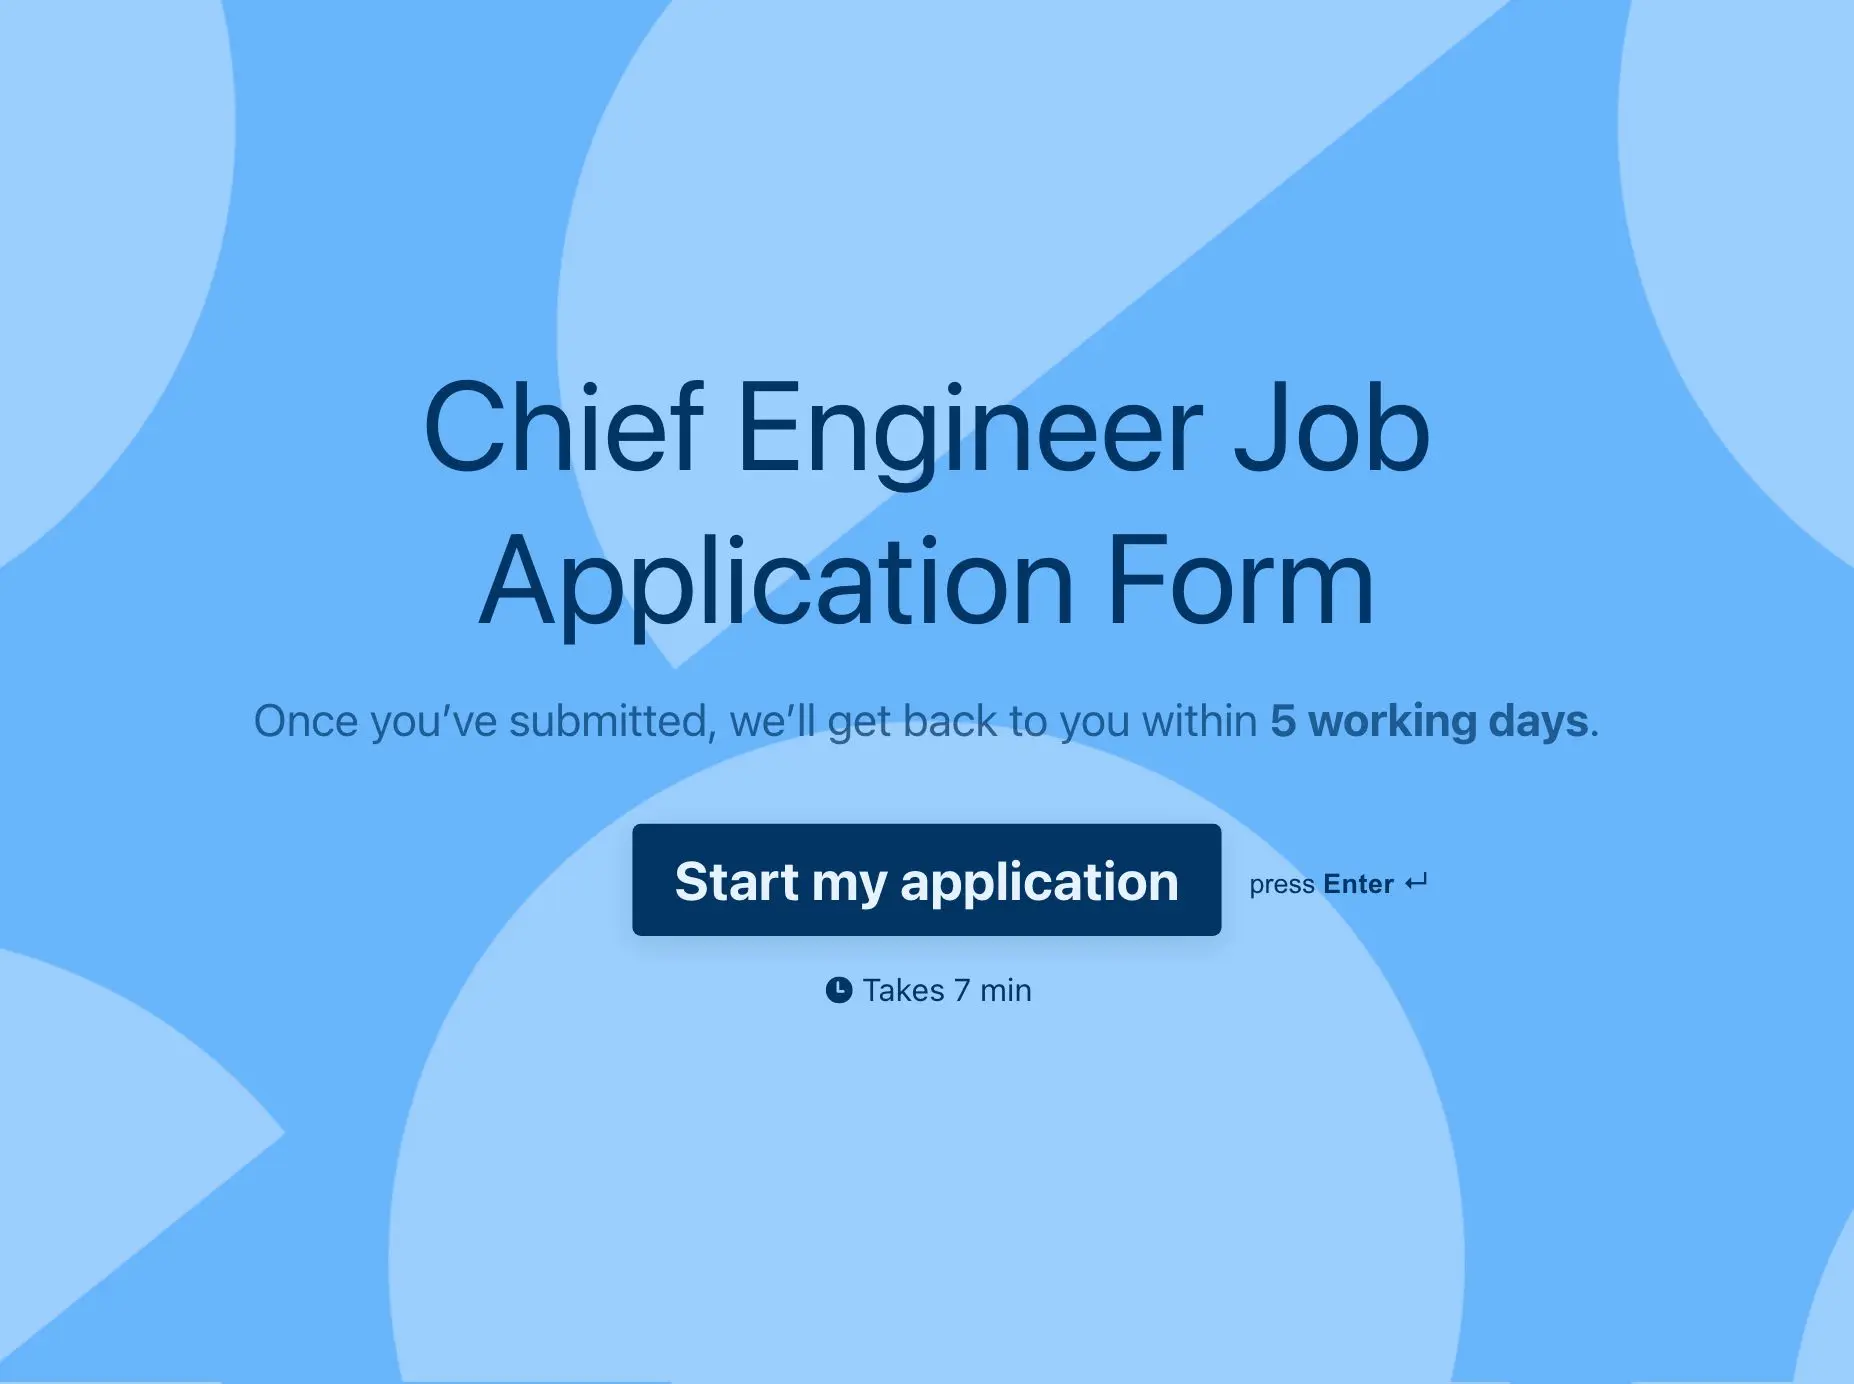 Chief Engineer Job Application Form Template Hero